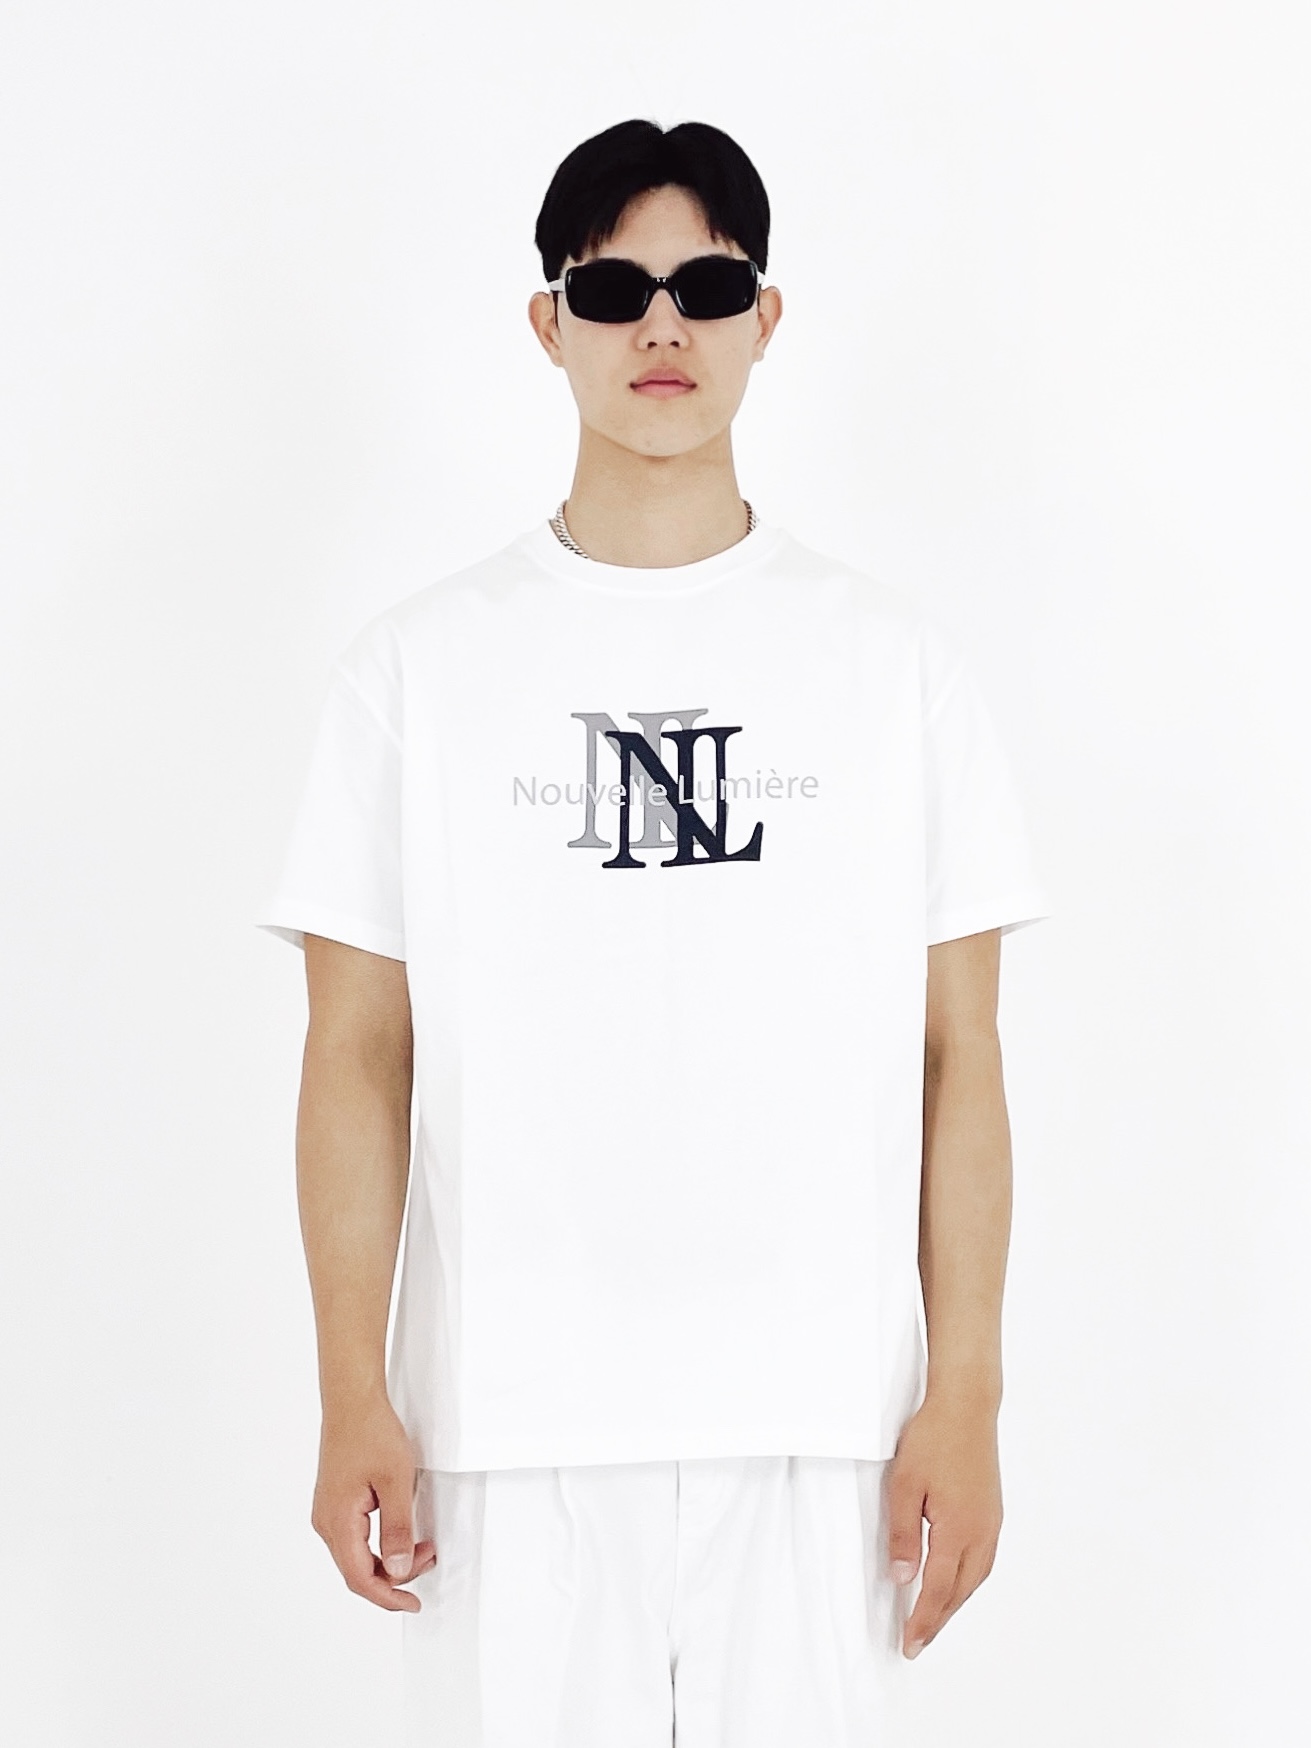 Nubelmiere Double Logo White Short-Sleeved T-Shirt